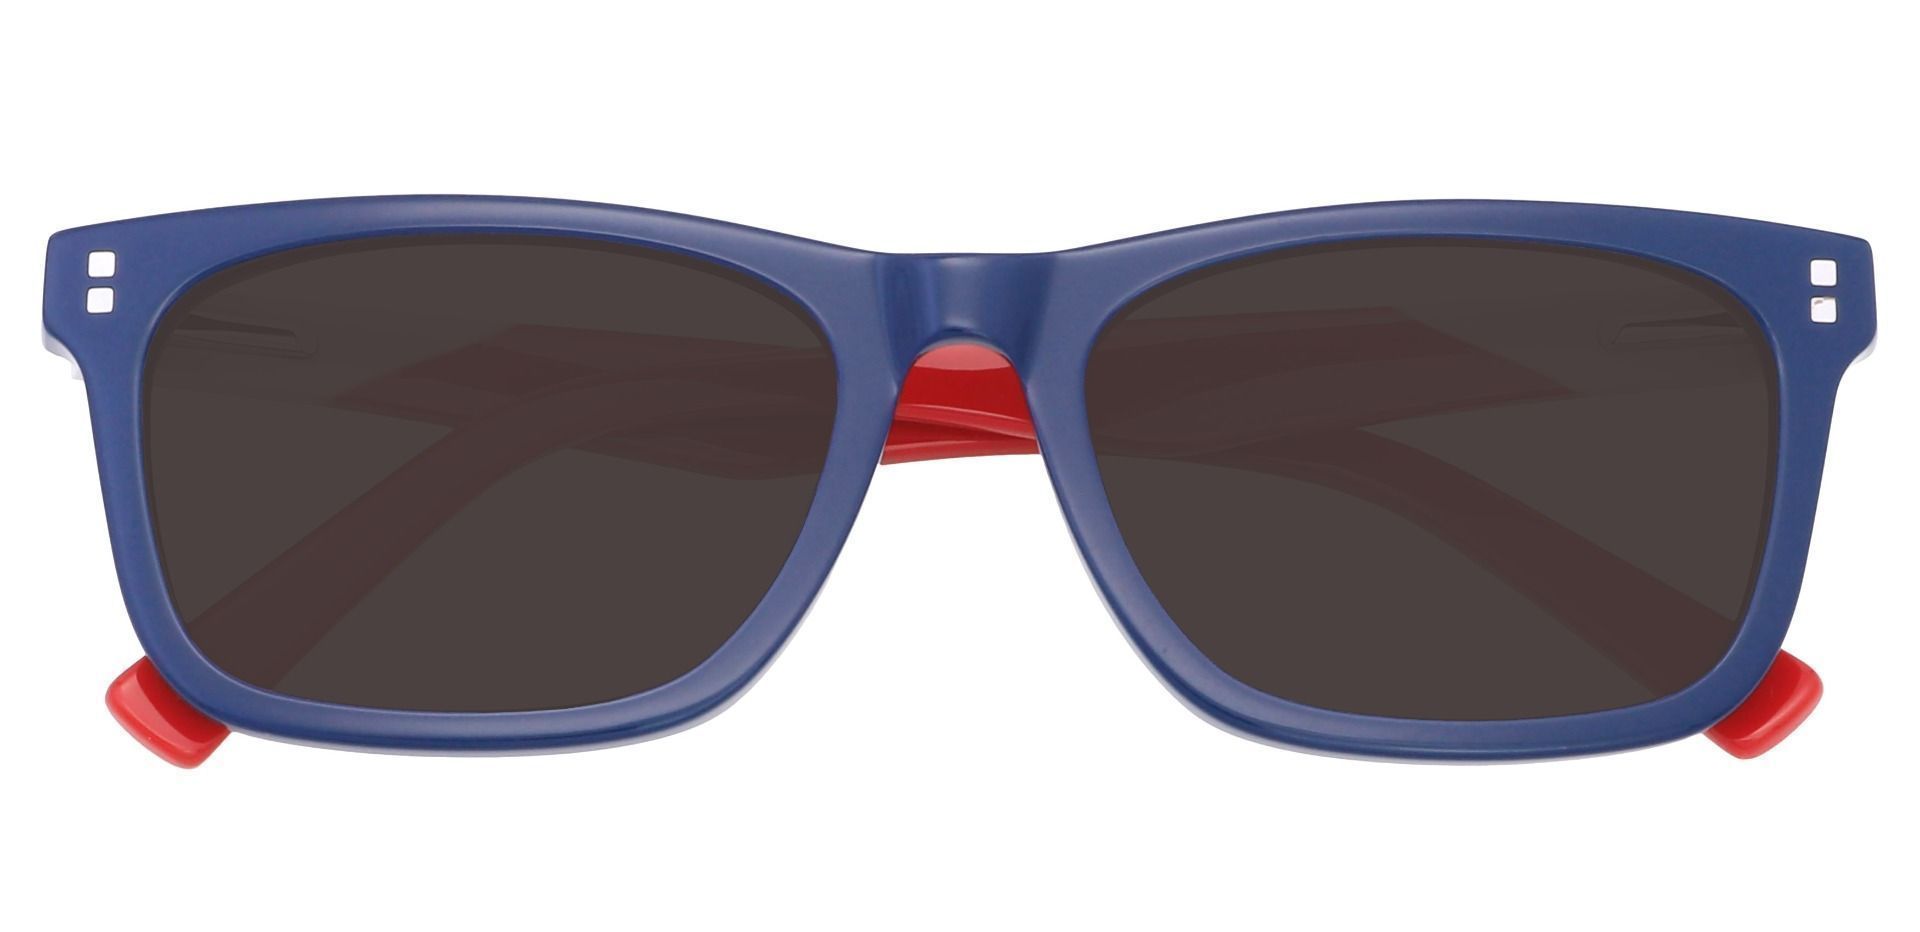 Newbury Rectangle Non-Rx Sunglasses - Blue Frame With Gray Lenses